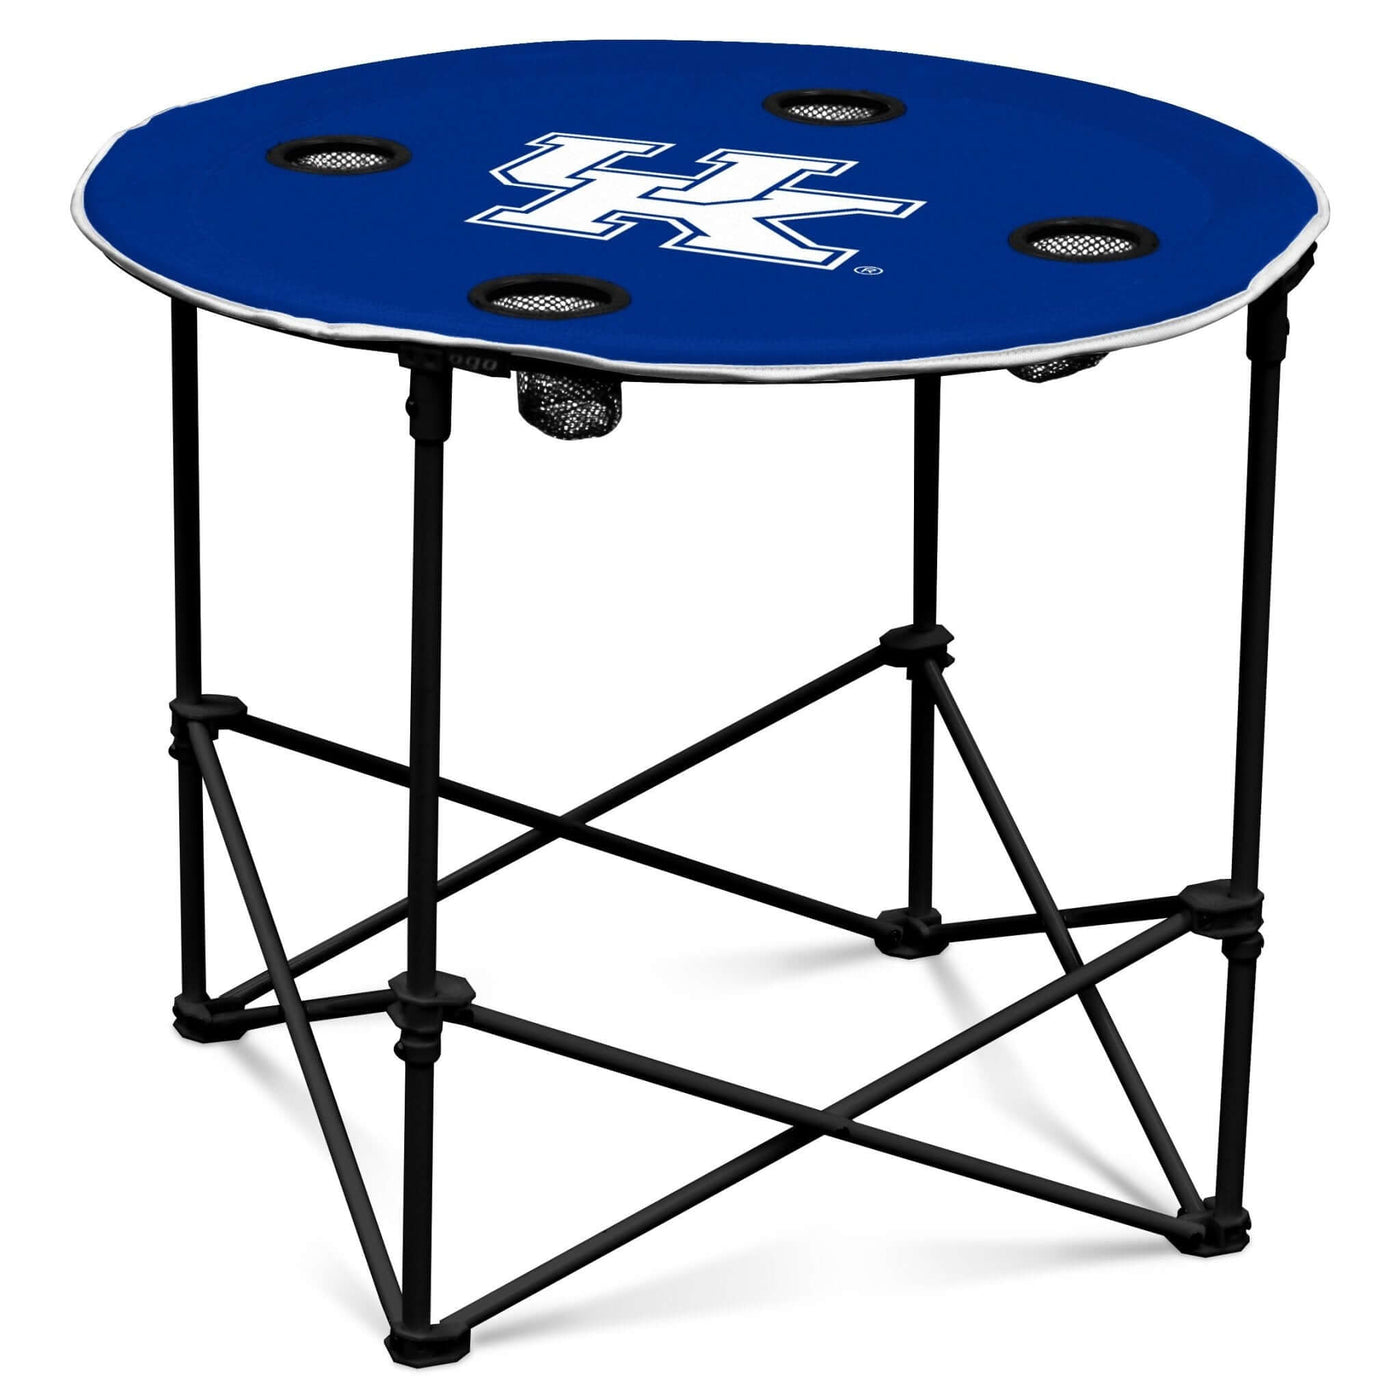 Kentucky Round Table - Logo Brands